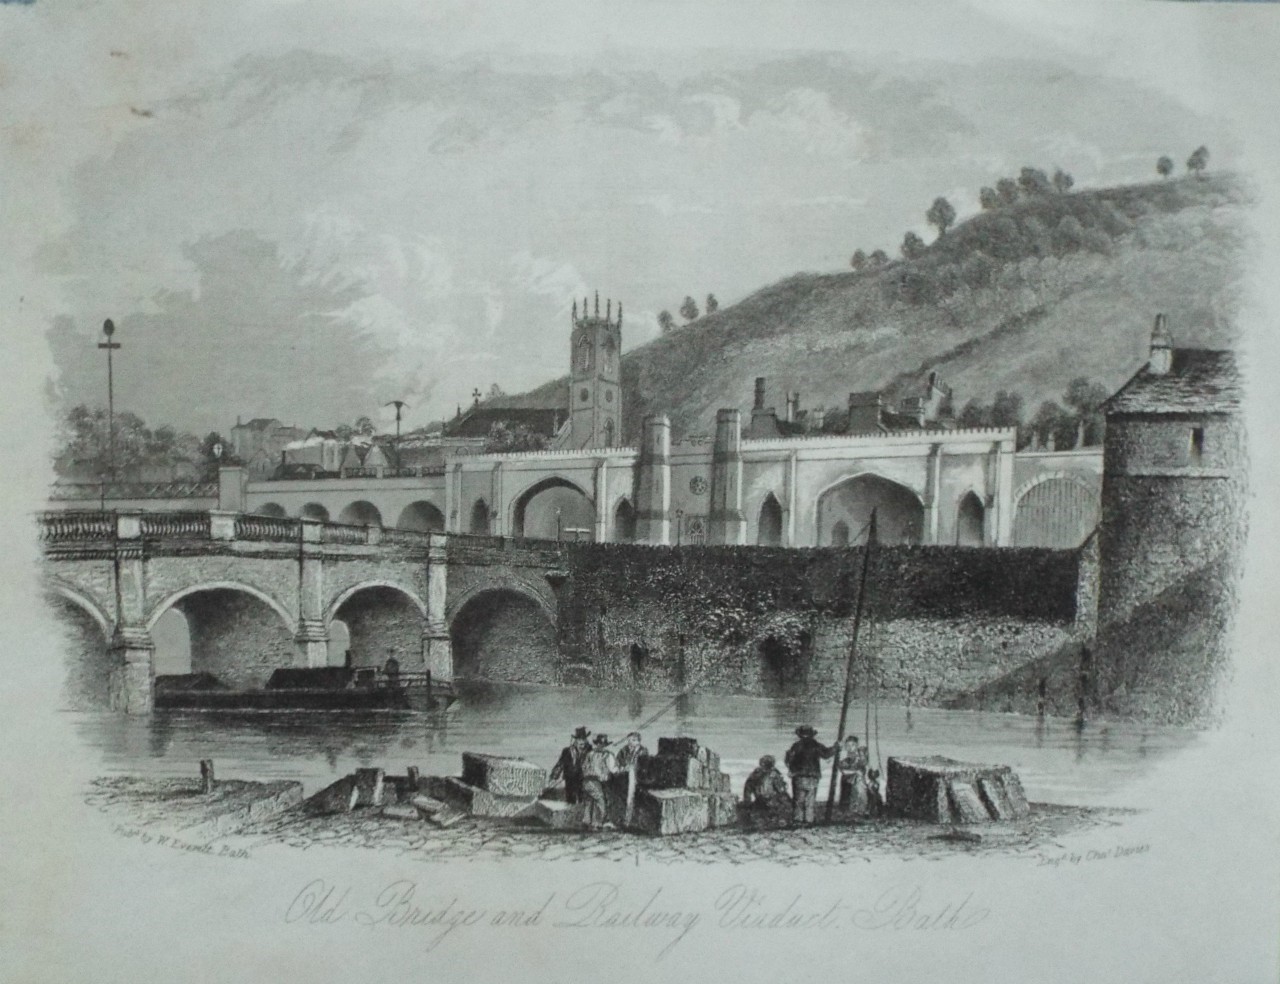 Steel Vignette - Old Bridge and Railway Viaduct, Bath.